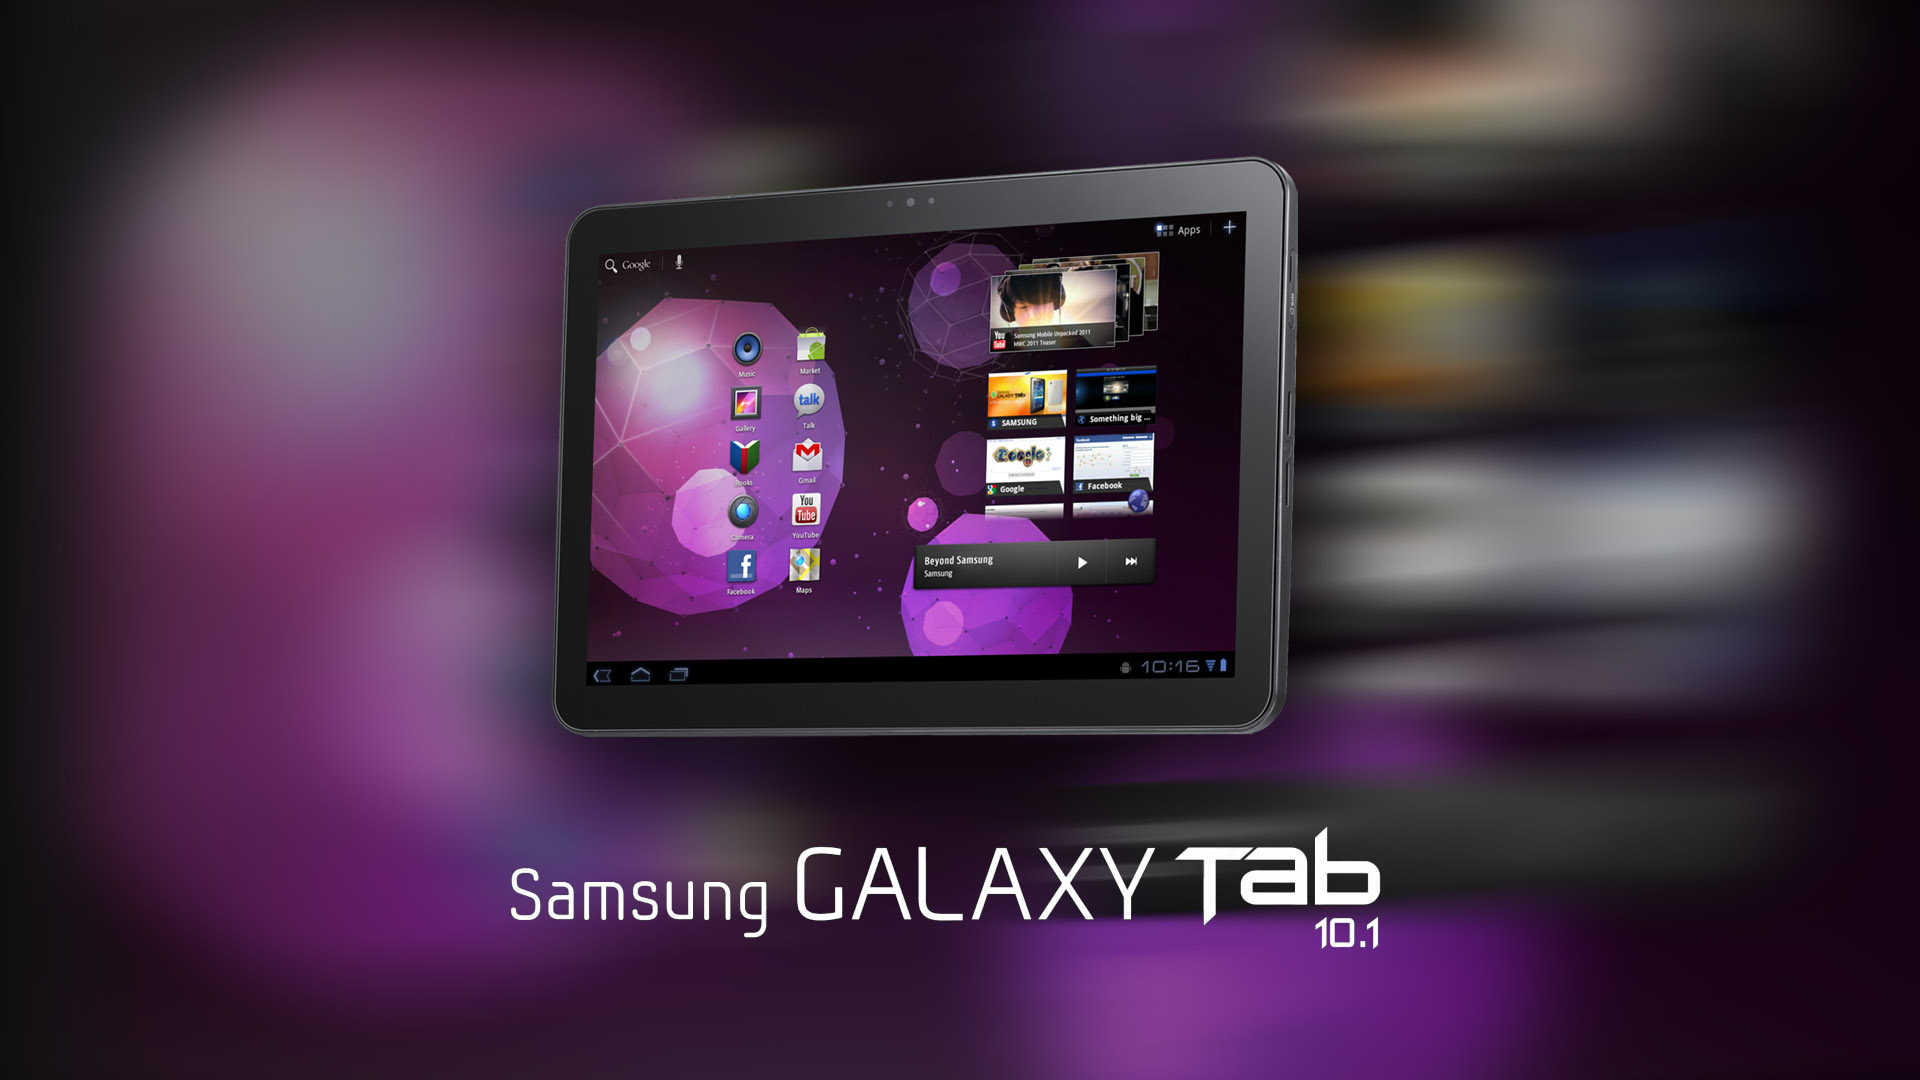 New Samsung Galaxy Tab HD Image Gadgets